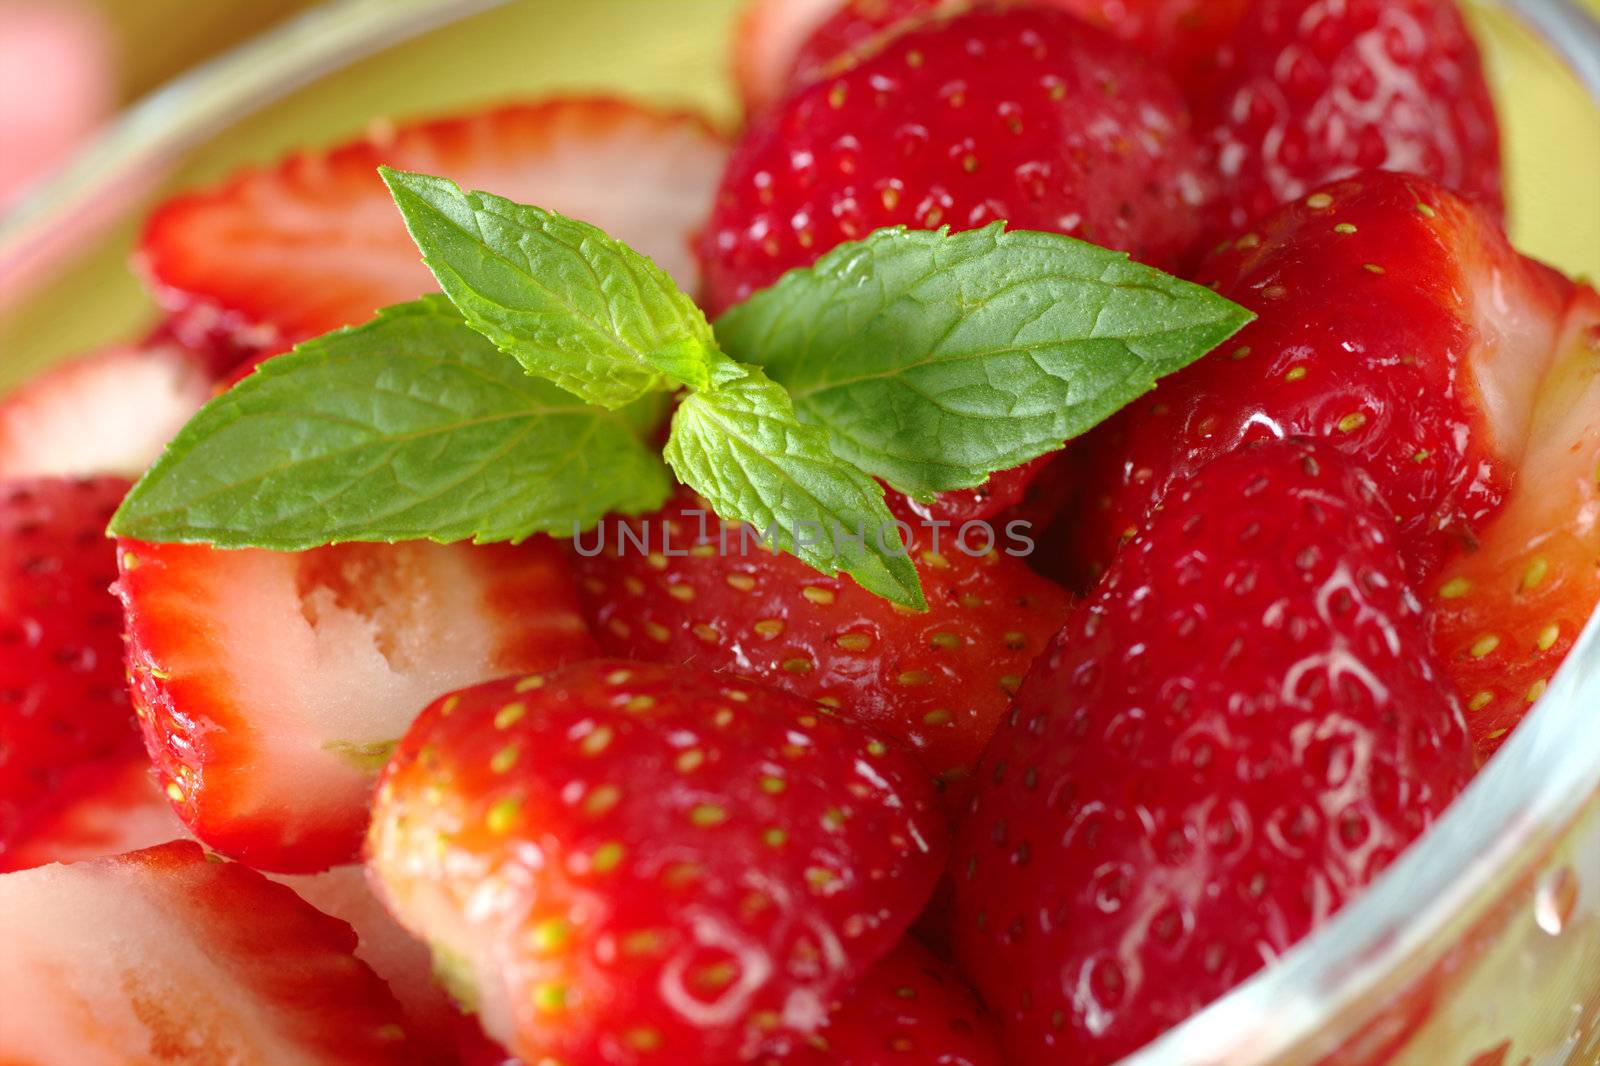 Mint Leaf on Strawberries by ildi